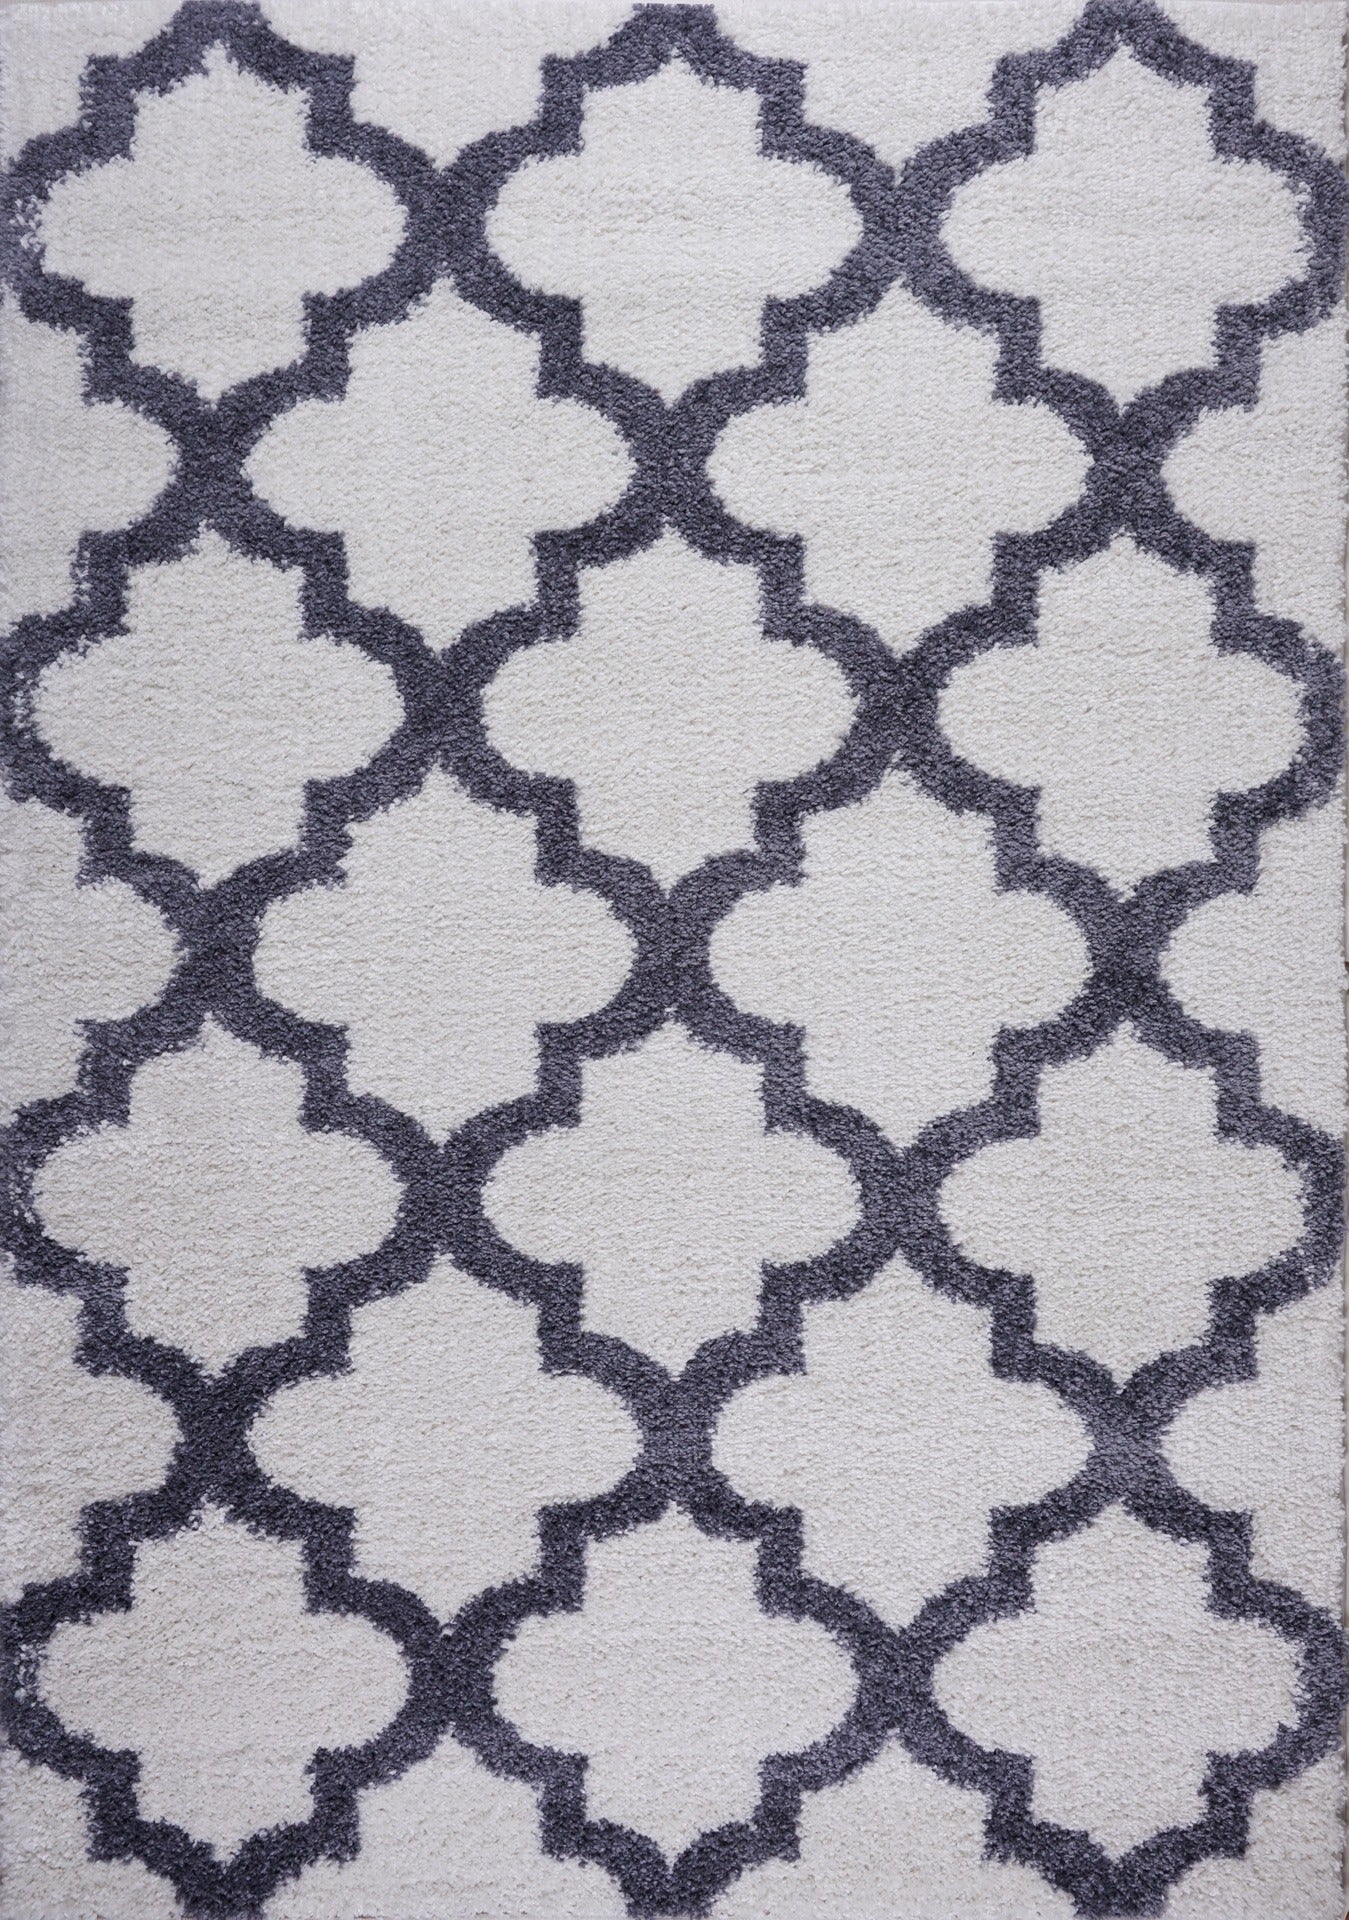 ladole rugs shaggy moroccan trellis fes polypropylene area rug carpet white dark gray 4x6 311 x 57 120cm x 170cm 2x3 Doormat, Entrance, Balcony, Bathroom, Washroom